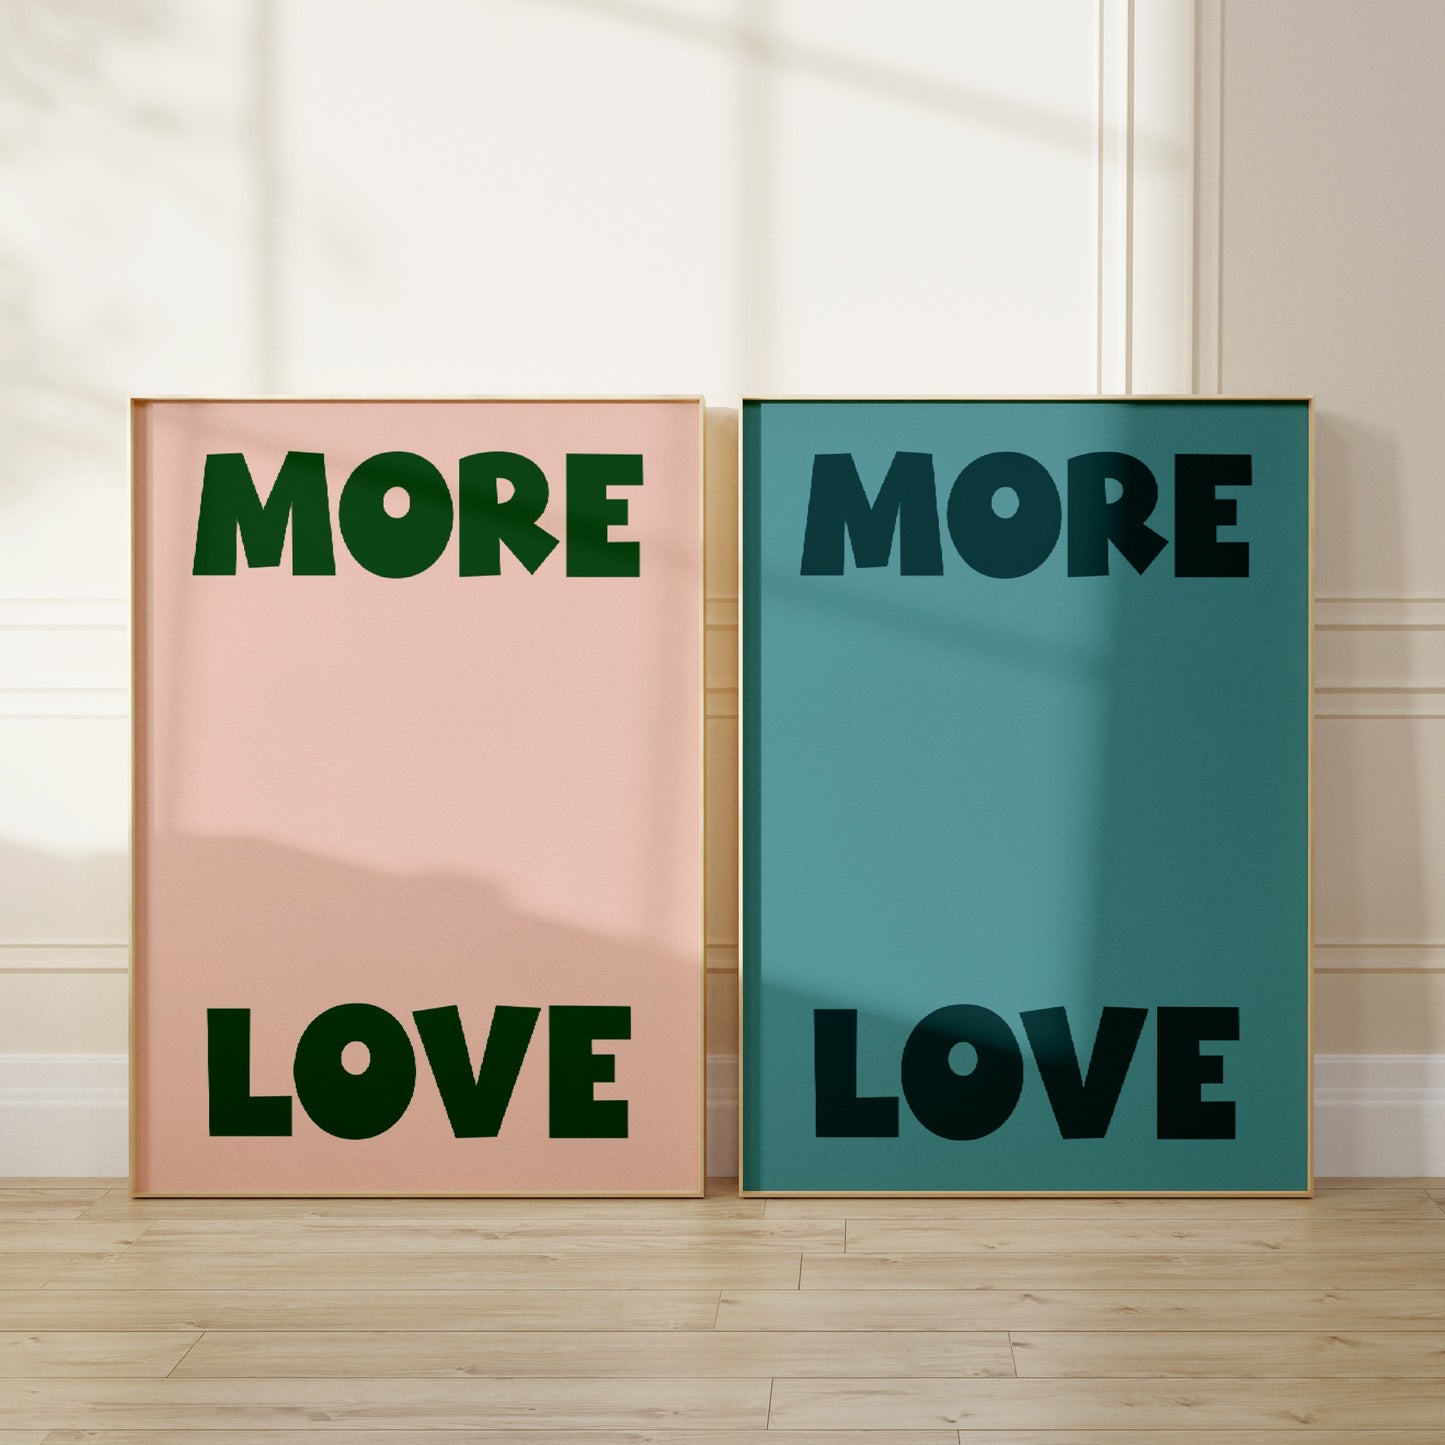 'More Love' Illustration